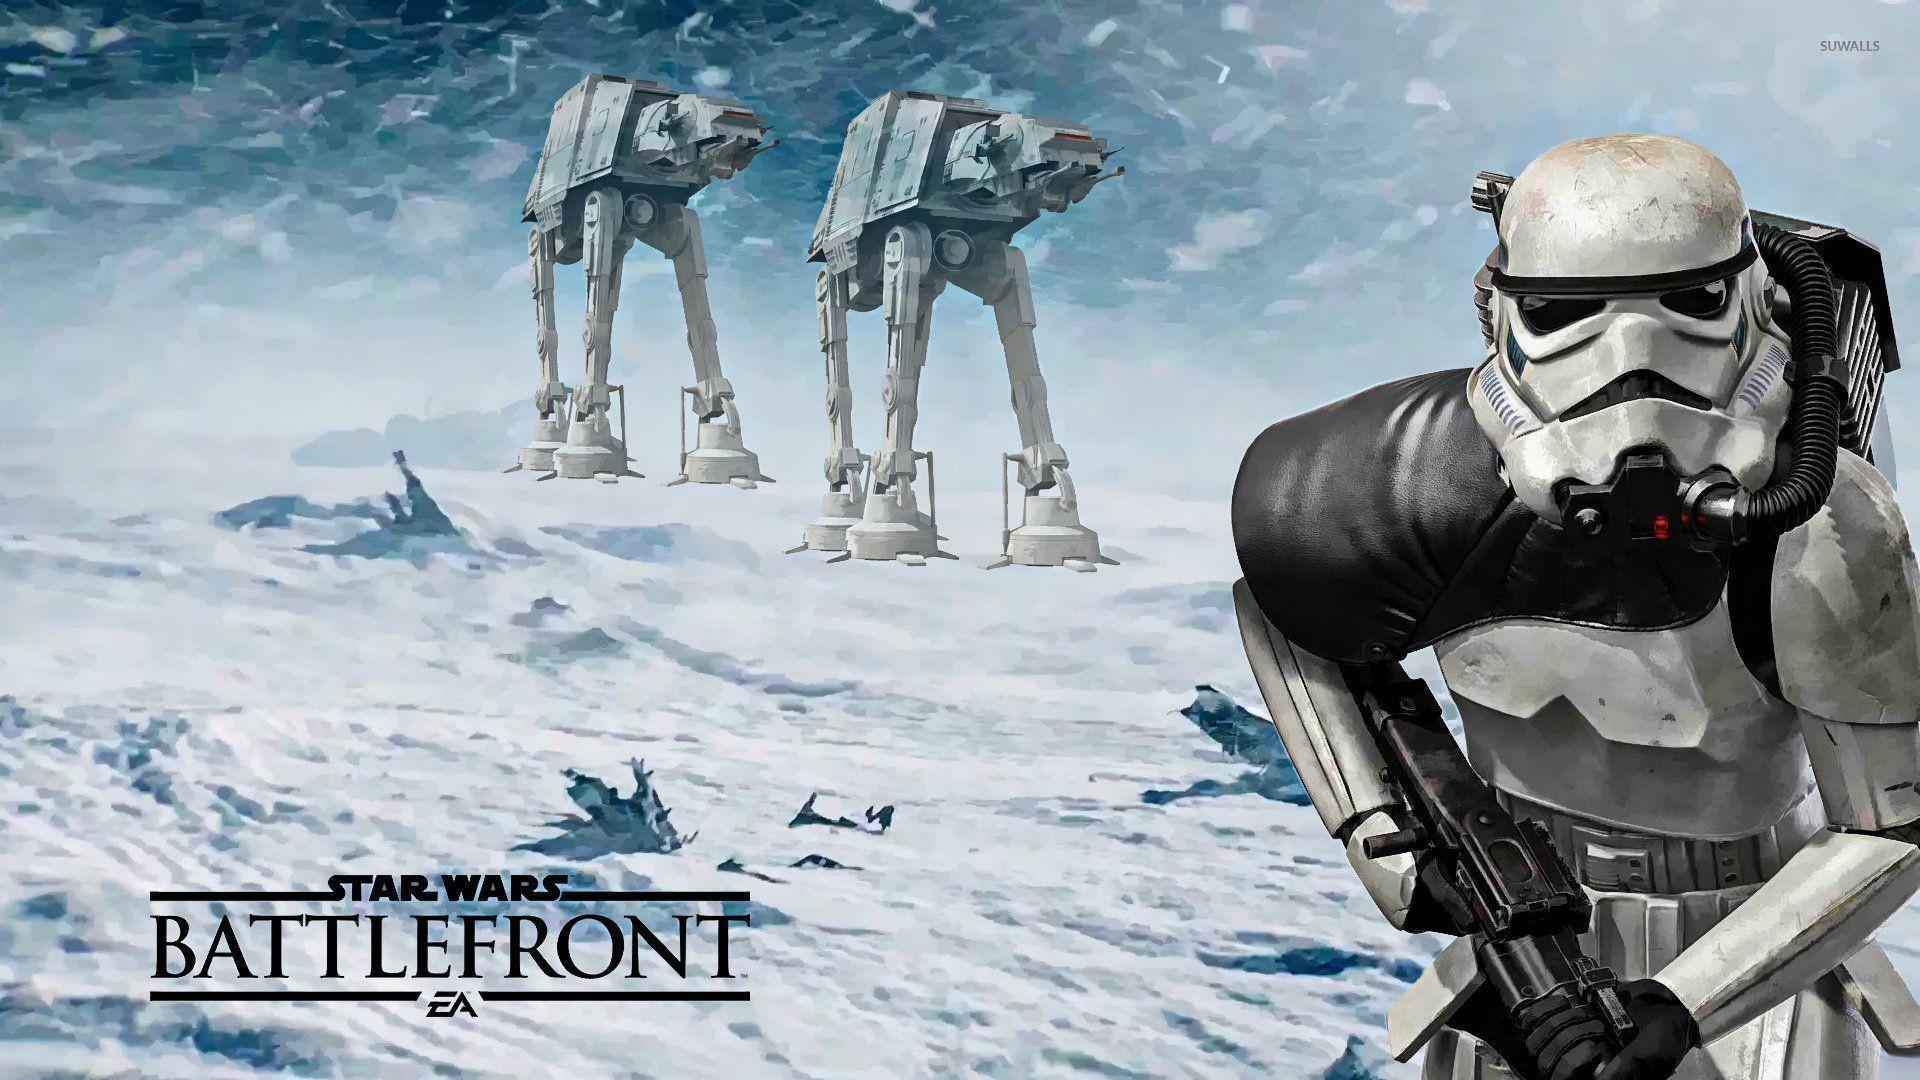 Darth Vader and Stormtroopers in Star Wars: Battlefront wallpaper